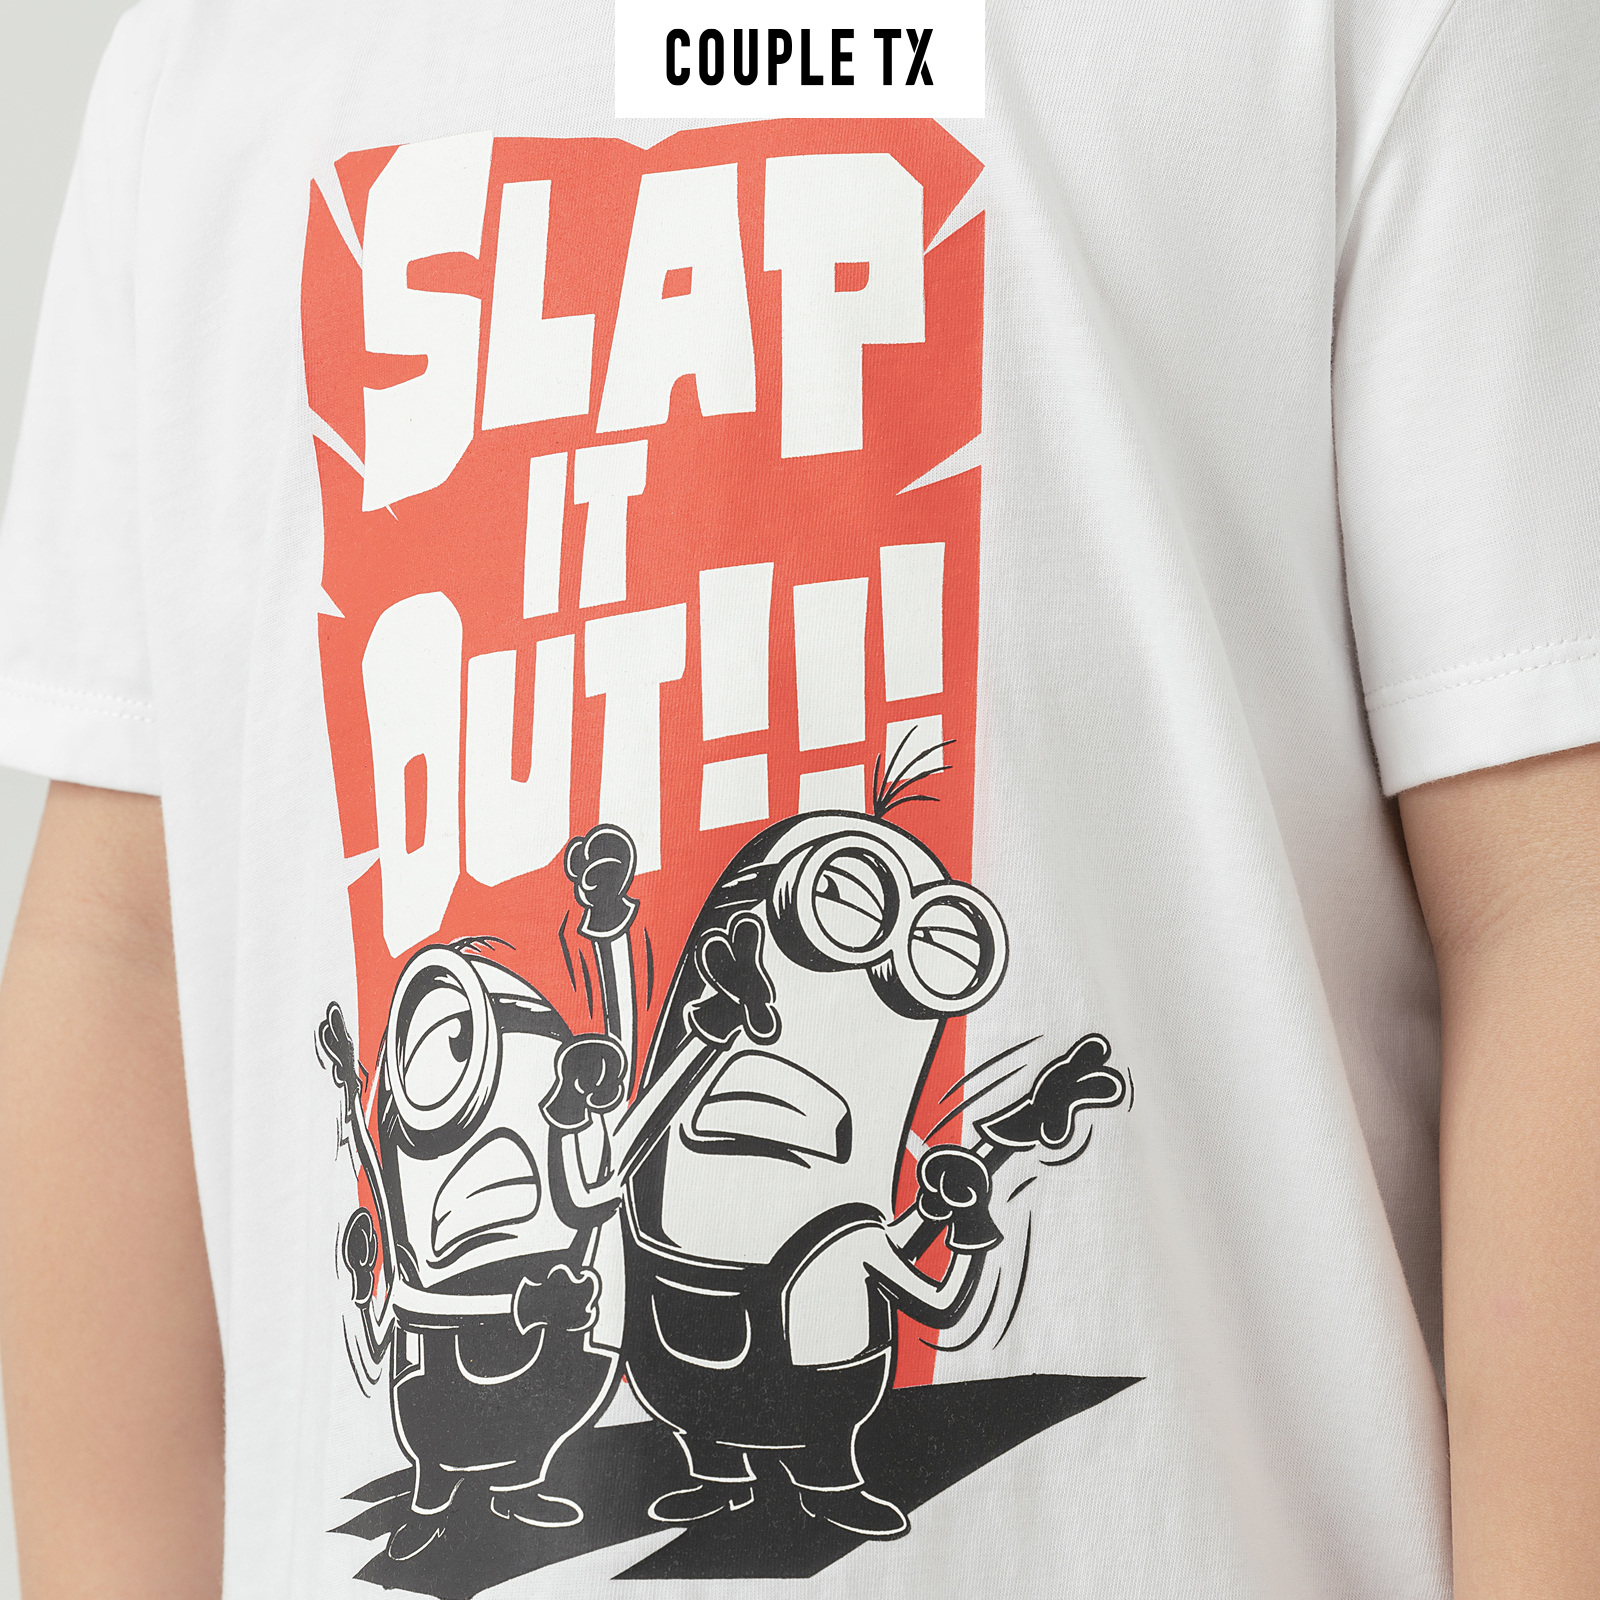 Áo Thun Trẻ Em In Graphic Slap It Out Minions Couple TX KTS 3133